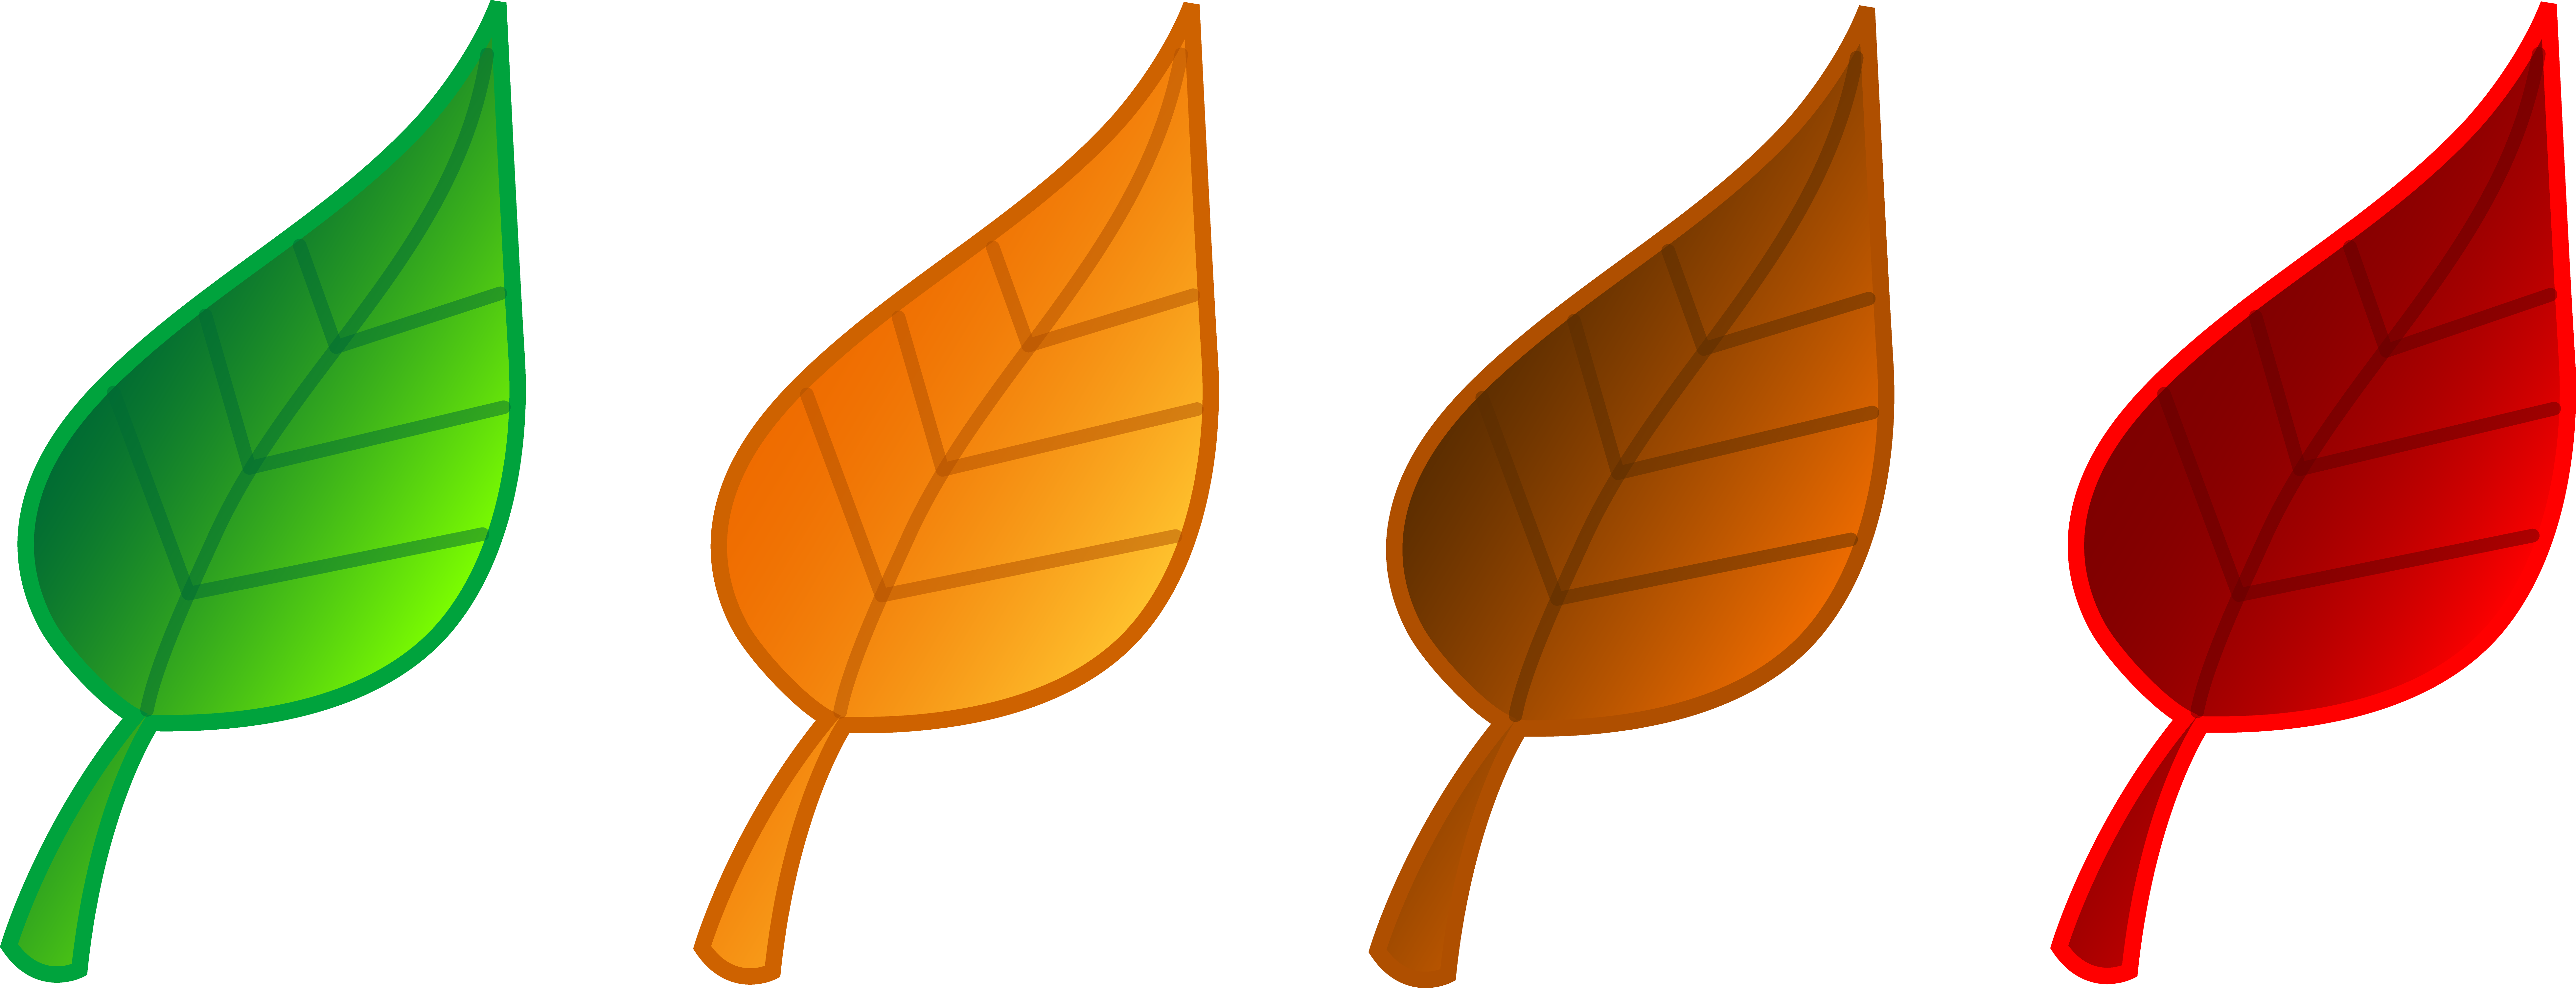 Leaves Clip Art - Gallery